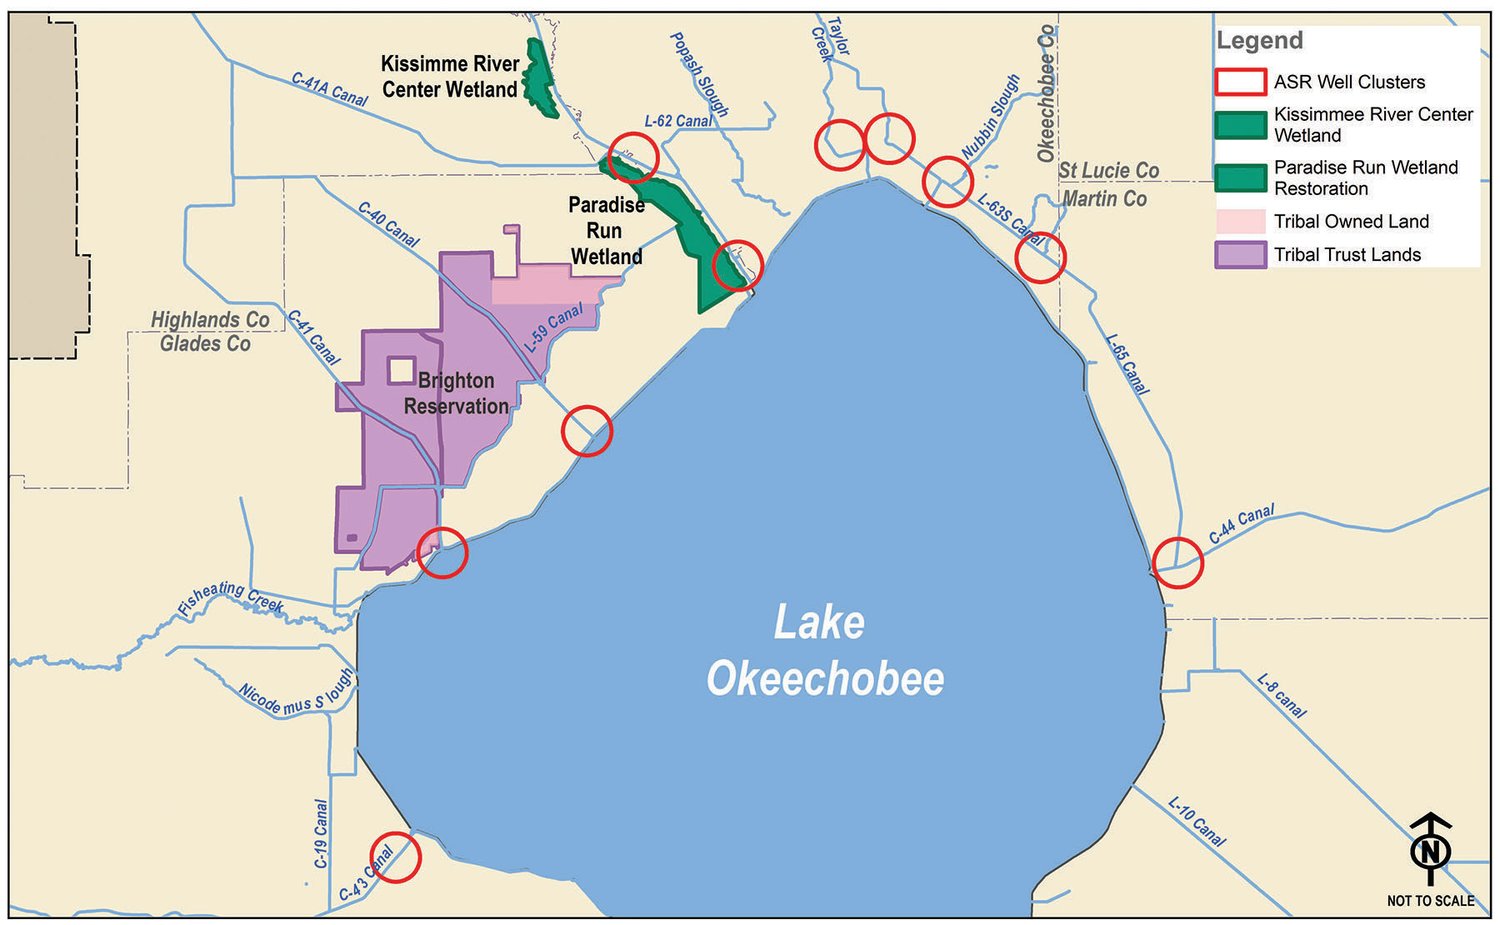 Lake Okeechobee Watershed Restoration map with Legend.